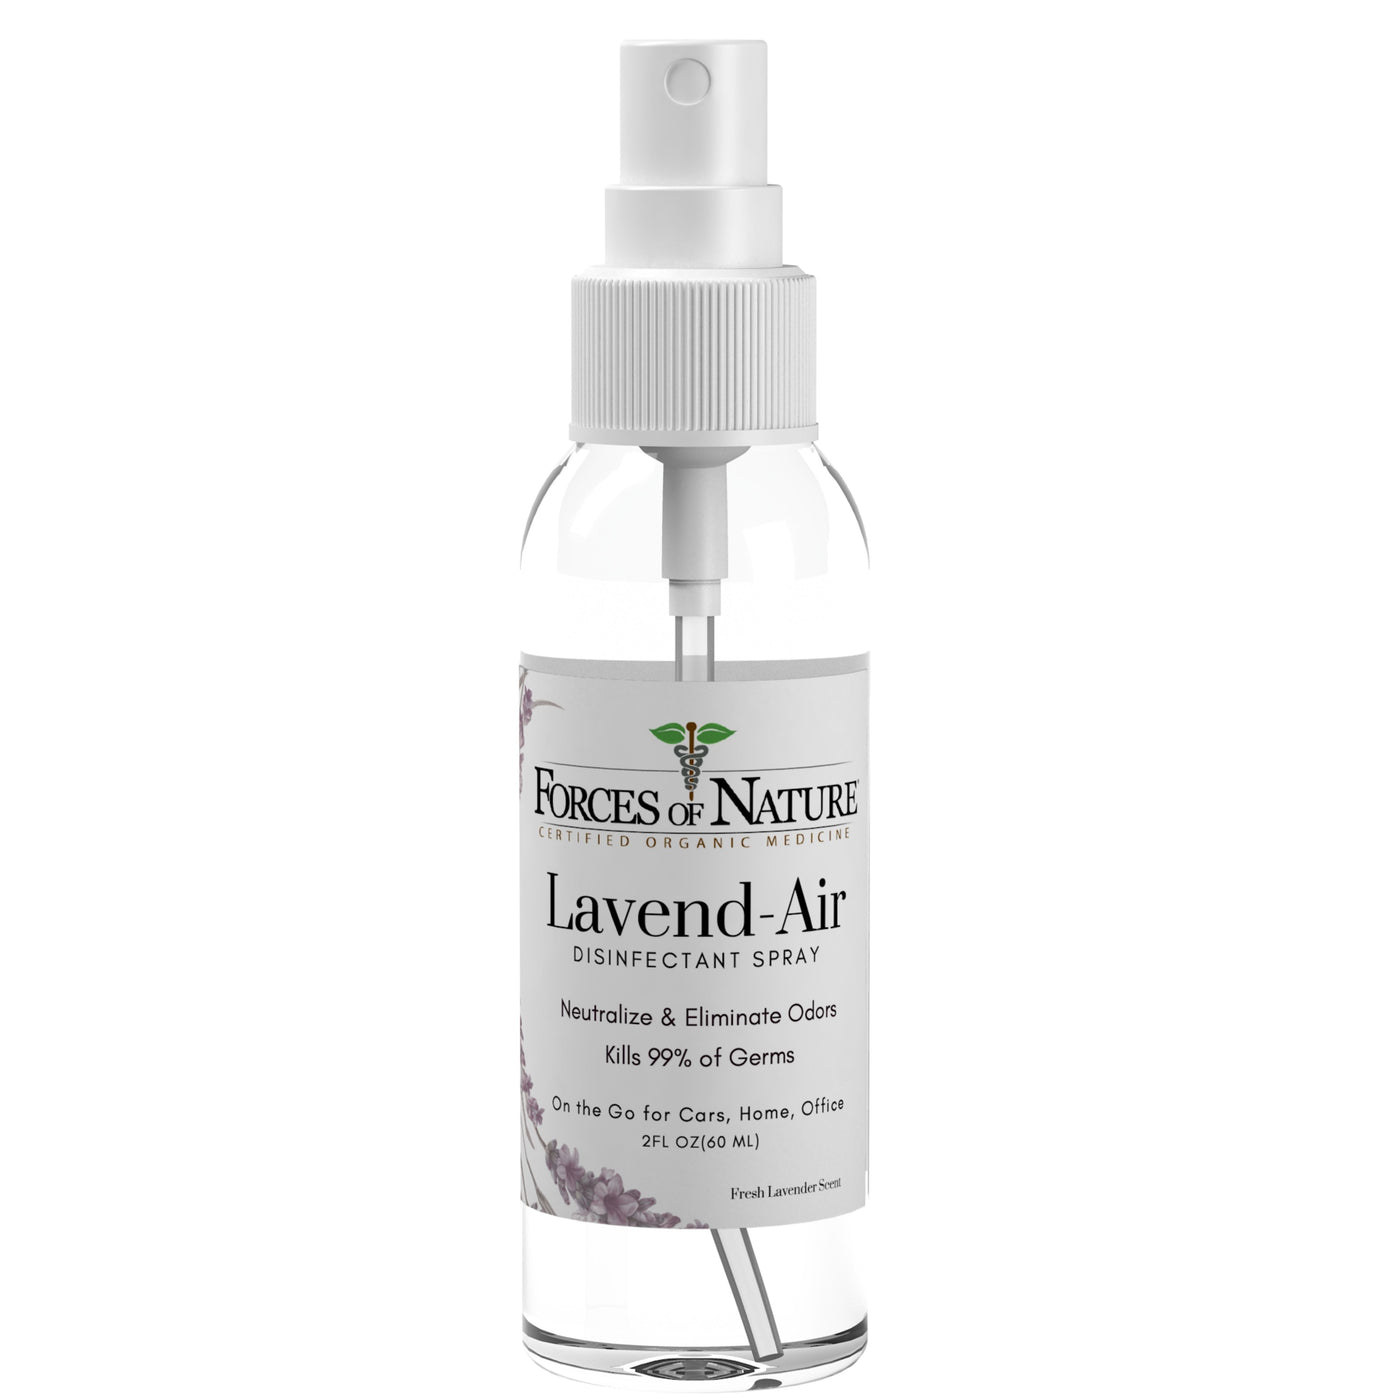 Lavend-Air Disinfectant Spray